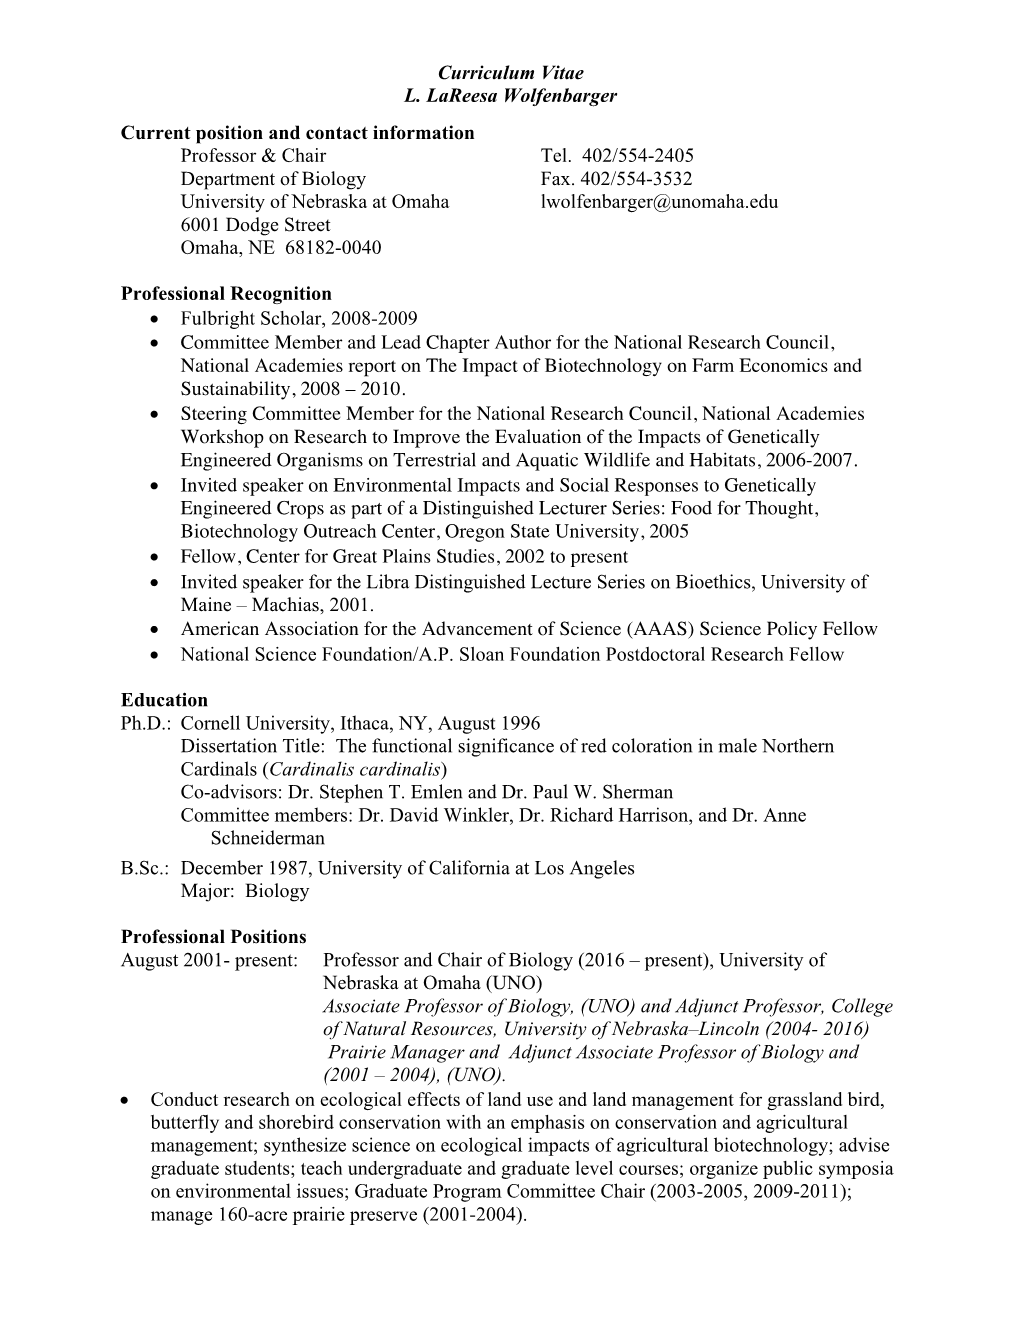 Curriculum Vitae L. Lareesa Wolfenbarger Current Position and Contact Information Professor & Chair Tel. 402/554-2405 Depar